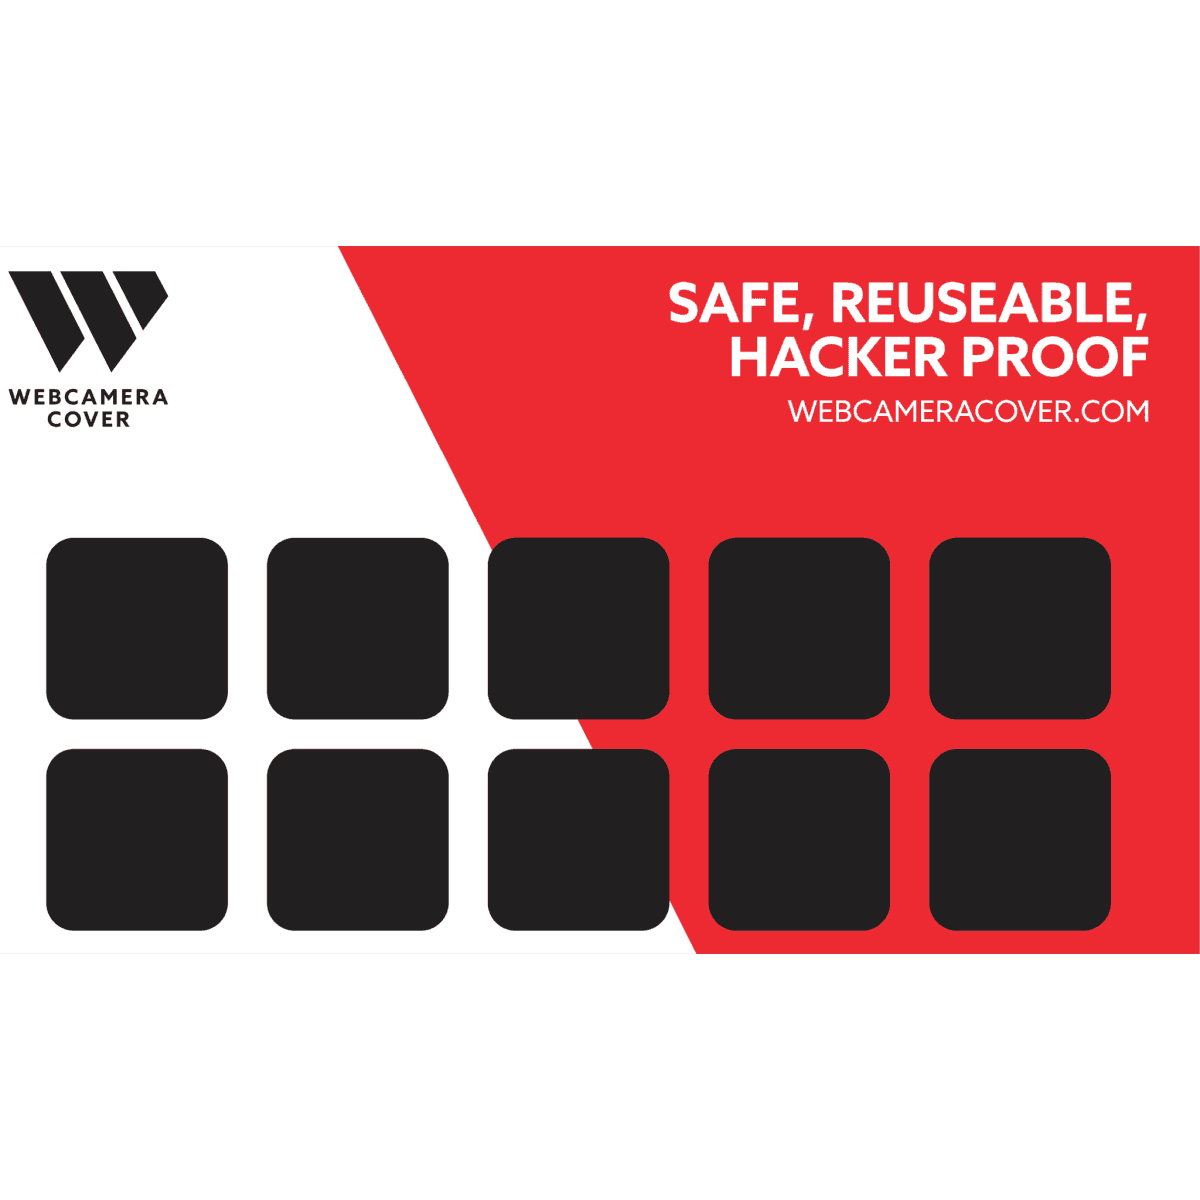 Mic-Lock Apple Privacy Pack - Mic-Lock